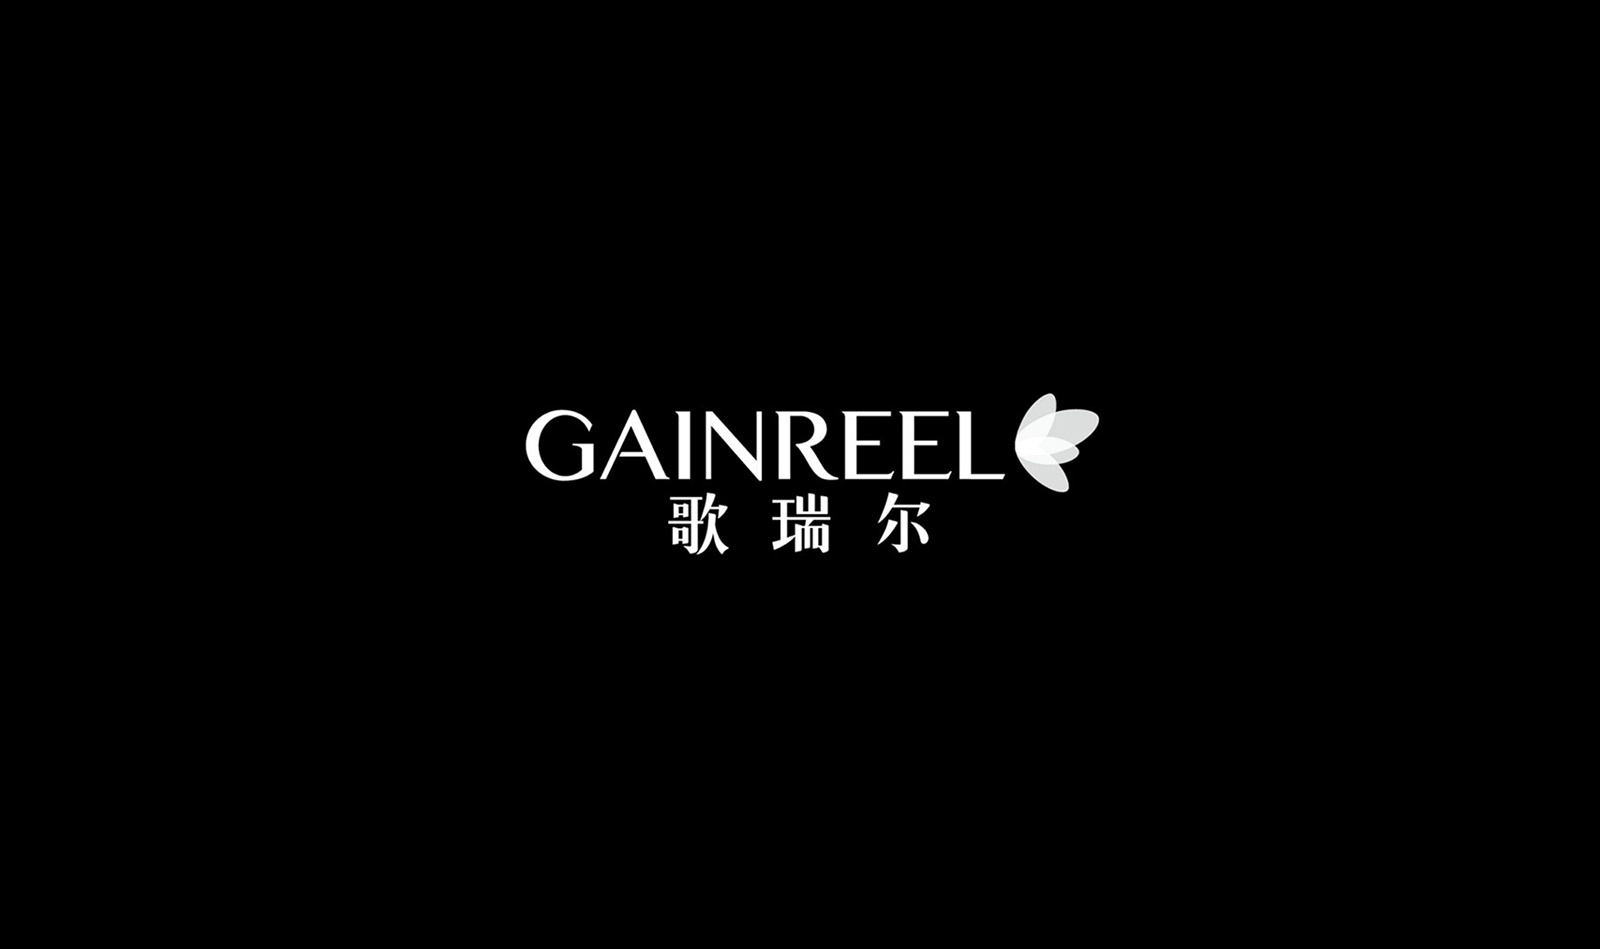 歌瑞尔gainreel品牌形象升级